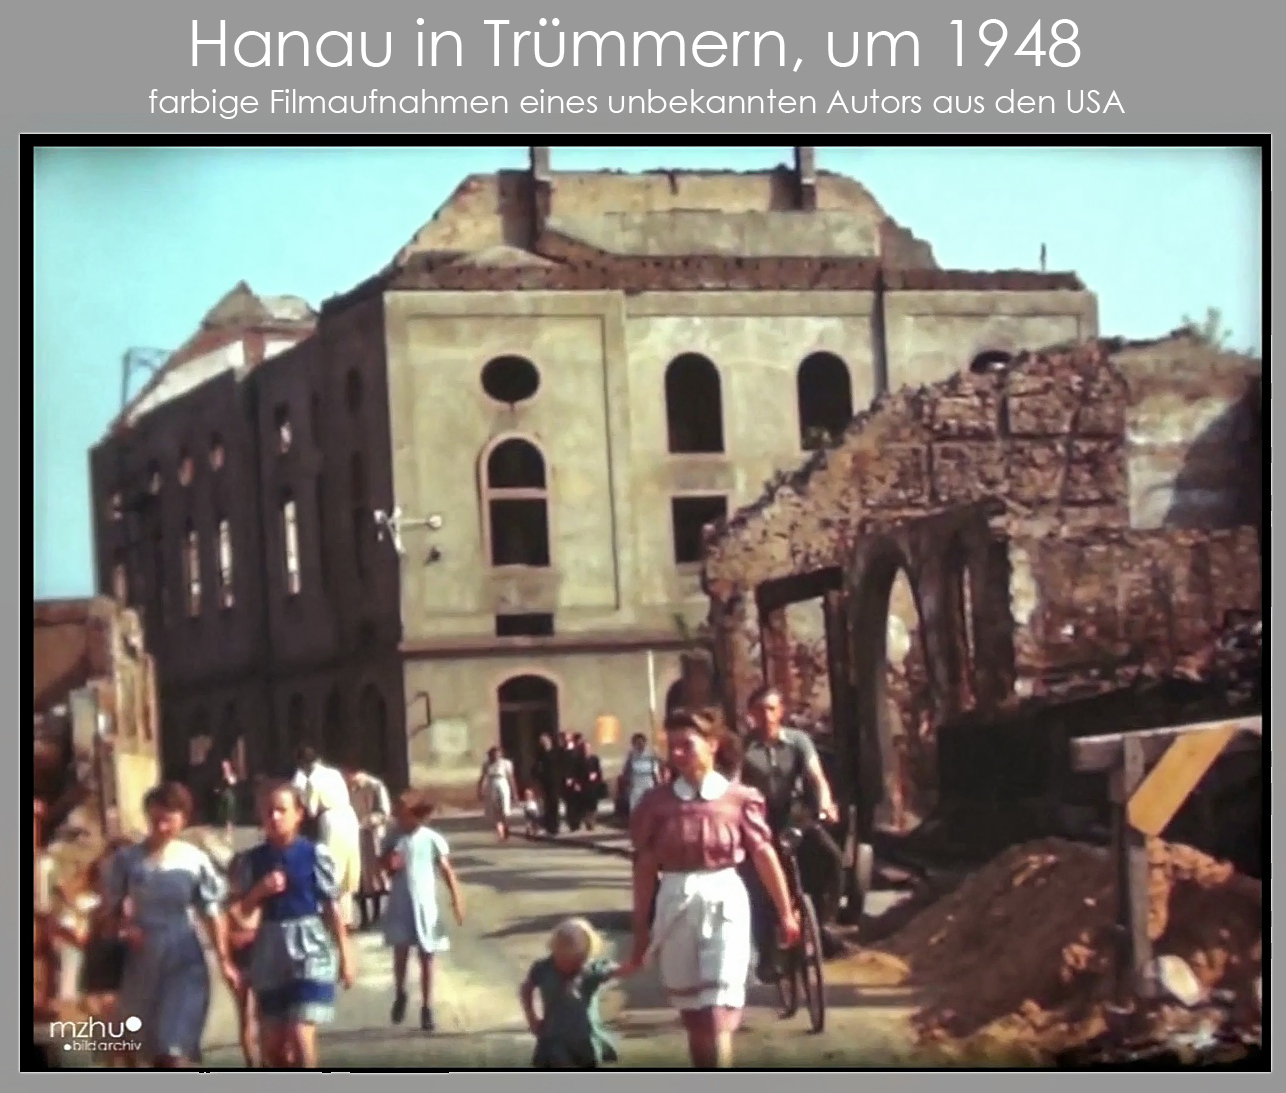 Hanau in Trümmern Bilddokumentation